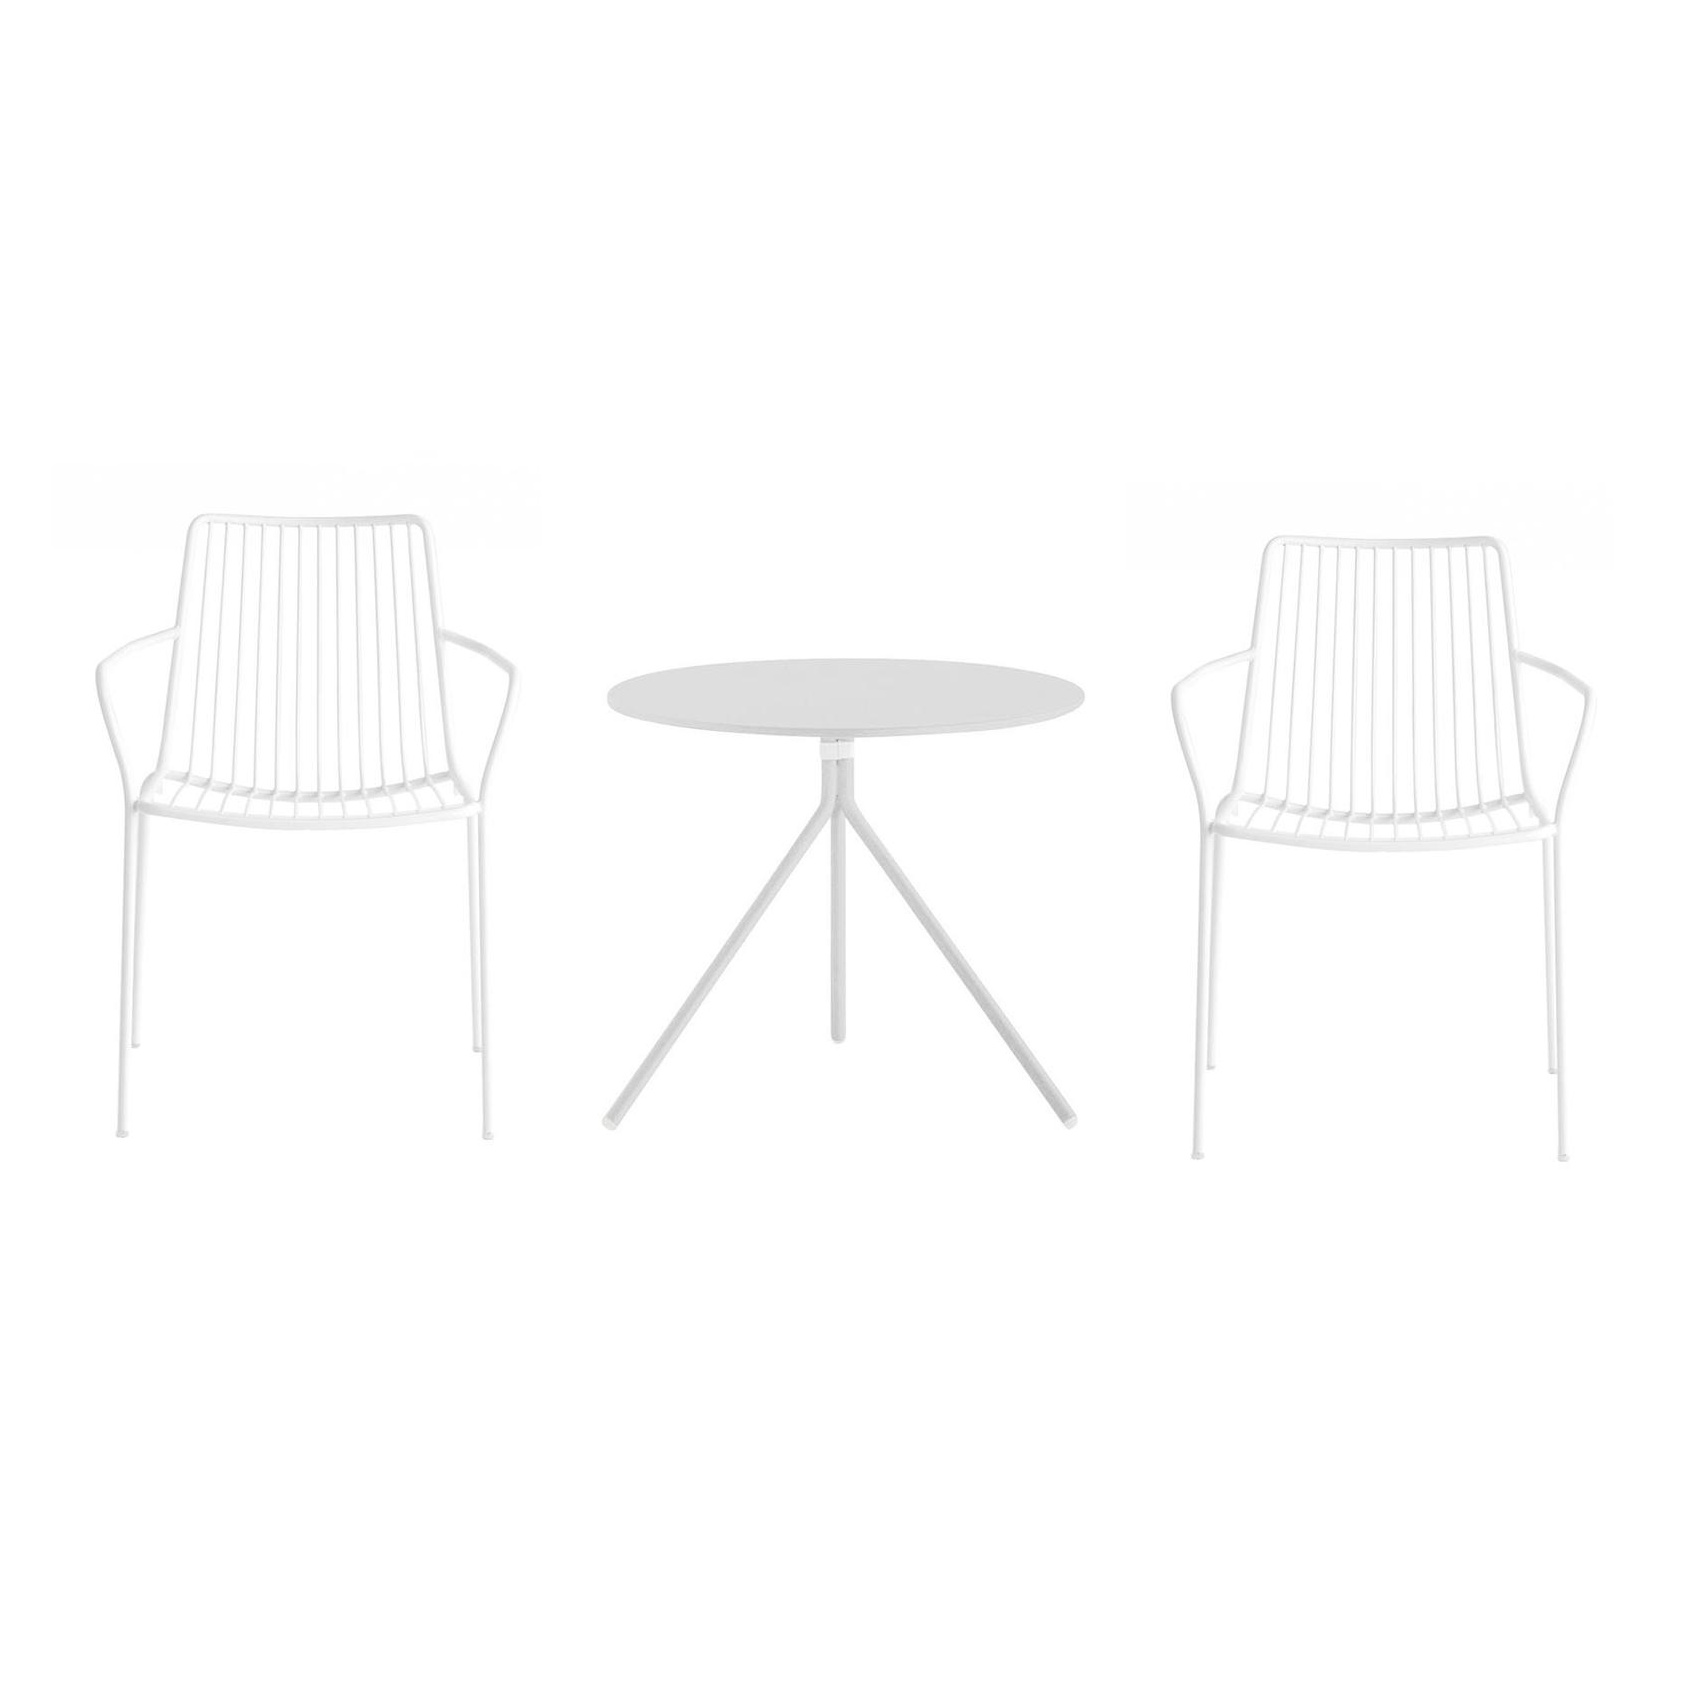 Pedrali - Nolita Gartenset - weiß/lackiert/1x Tisch: H 49cm / Ø 65,5cm/ 2.1kg/2x Stuhl: BxHxT 59,5x84,5x58cm/ 5.9kg von Pedrali